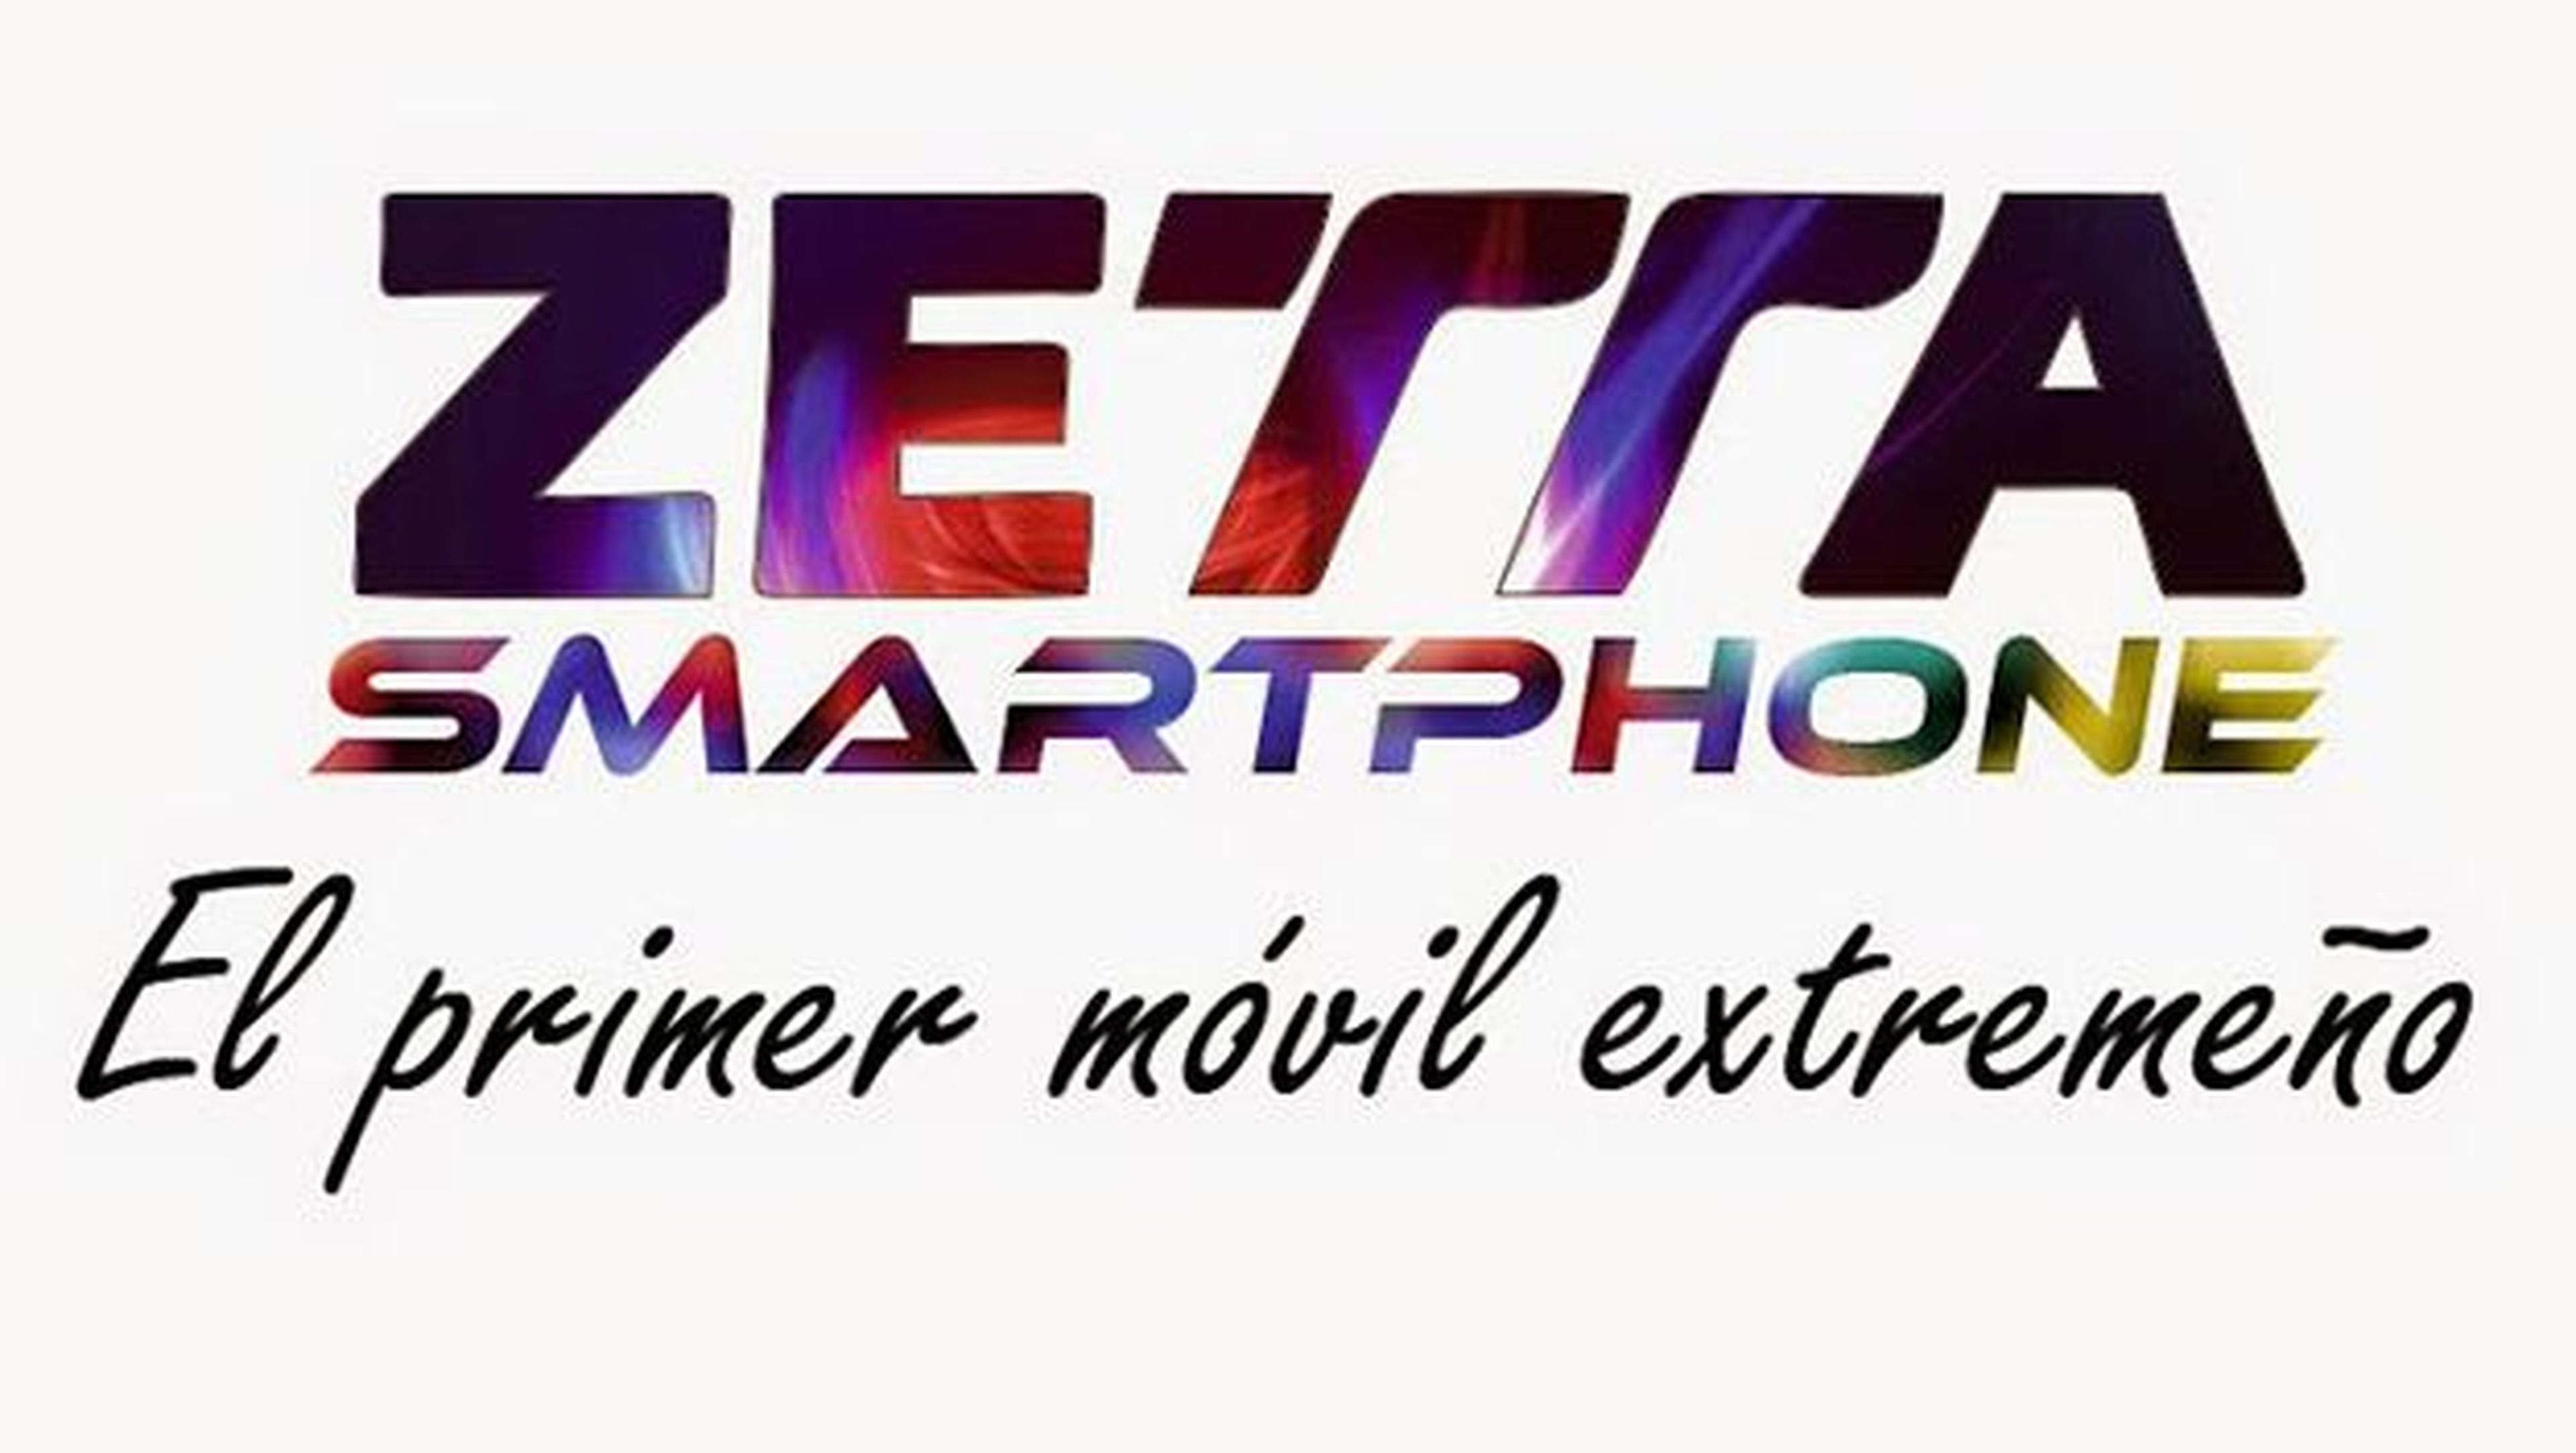 Zetta Smartphone